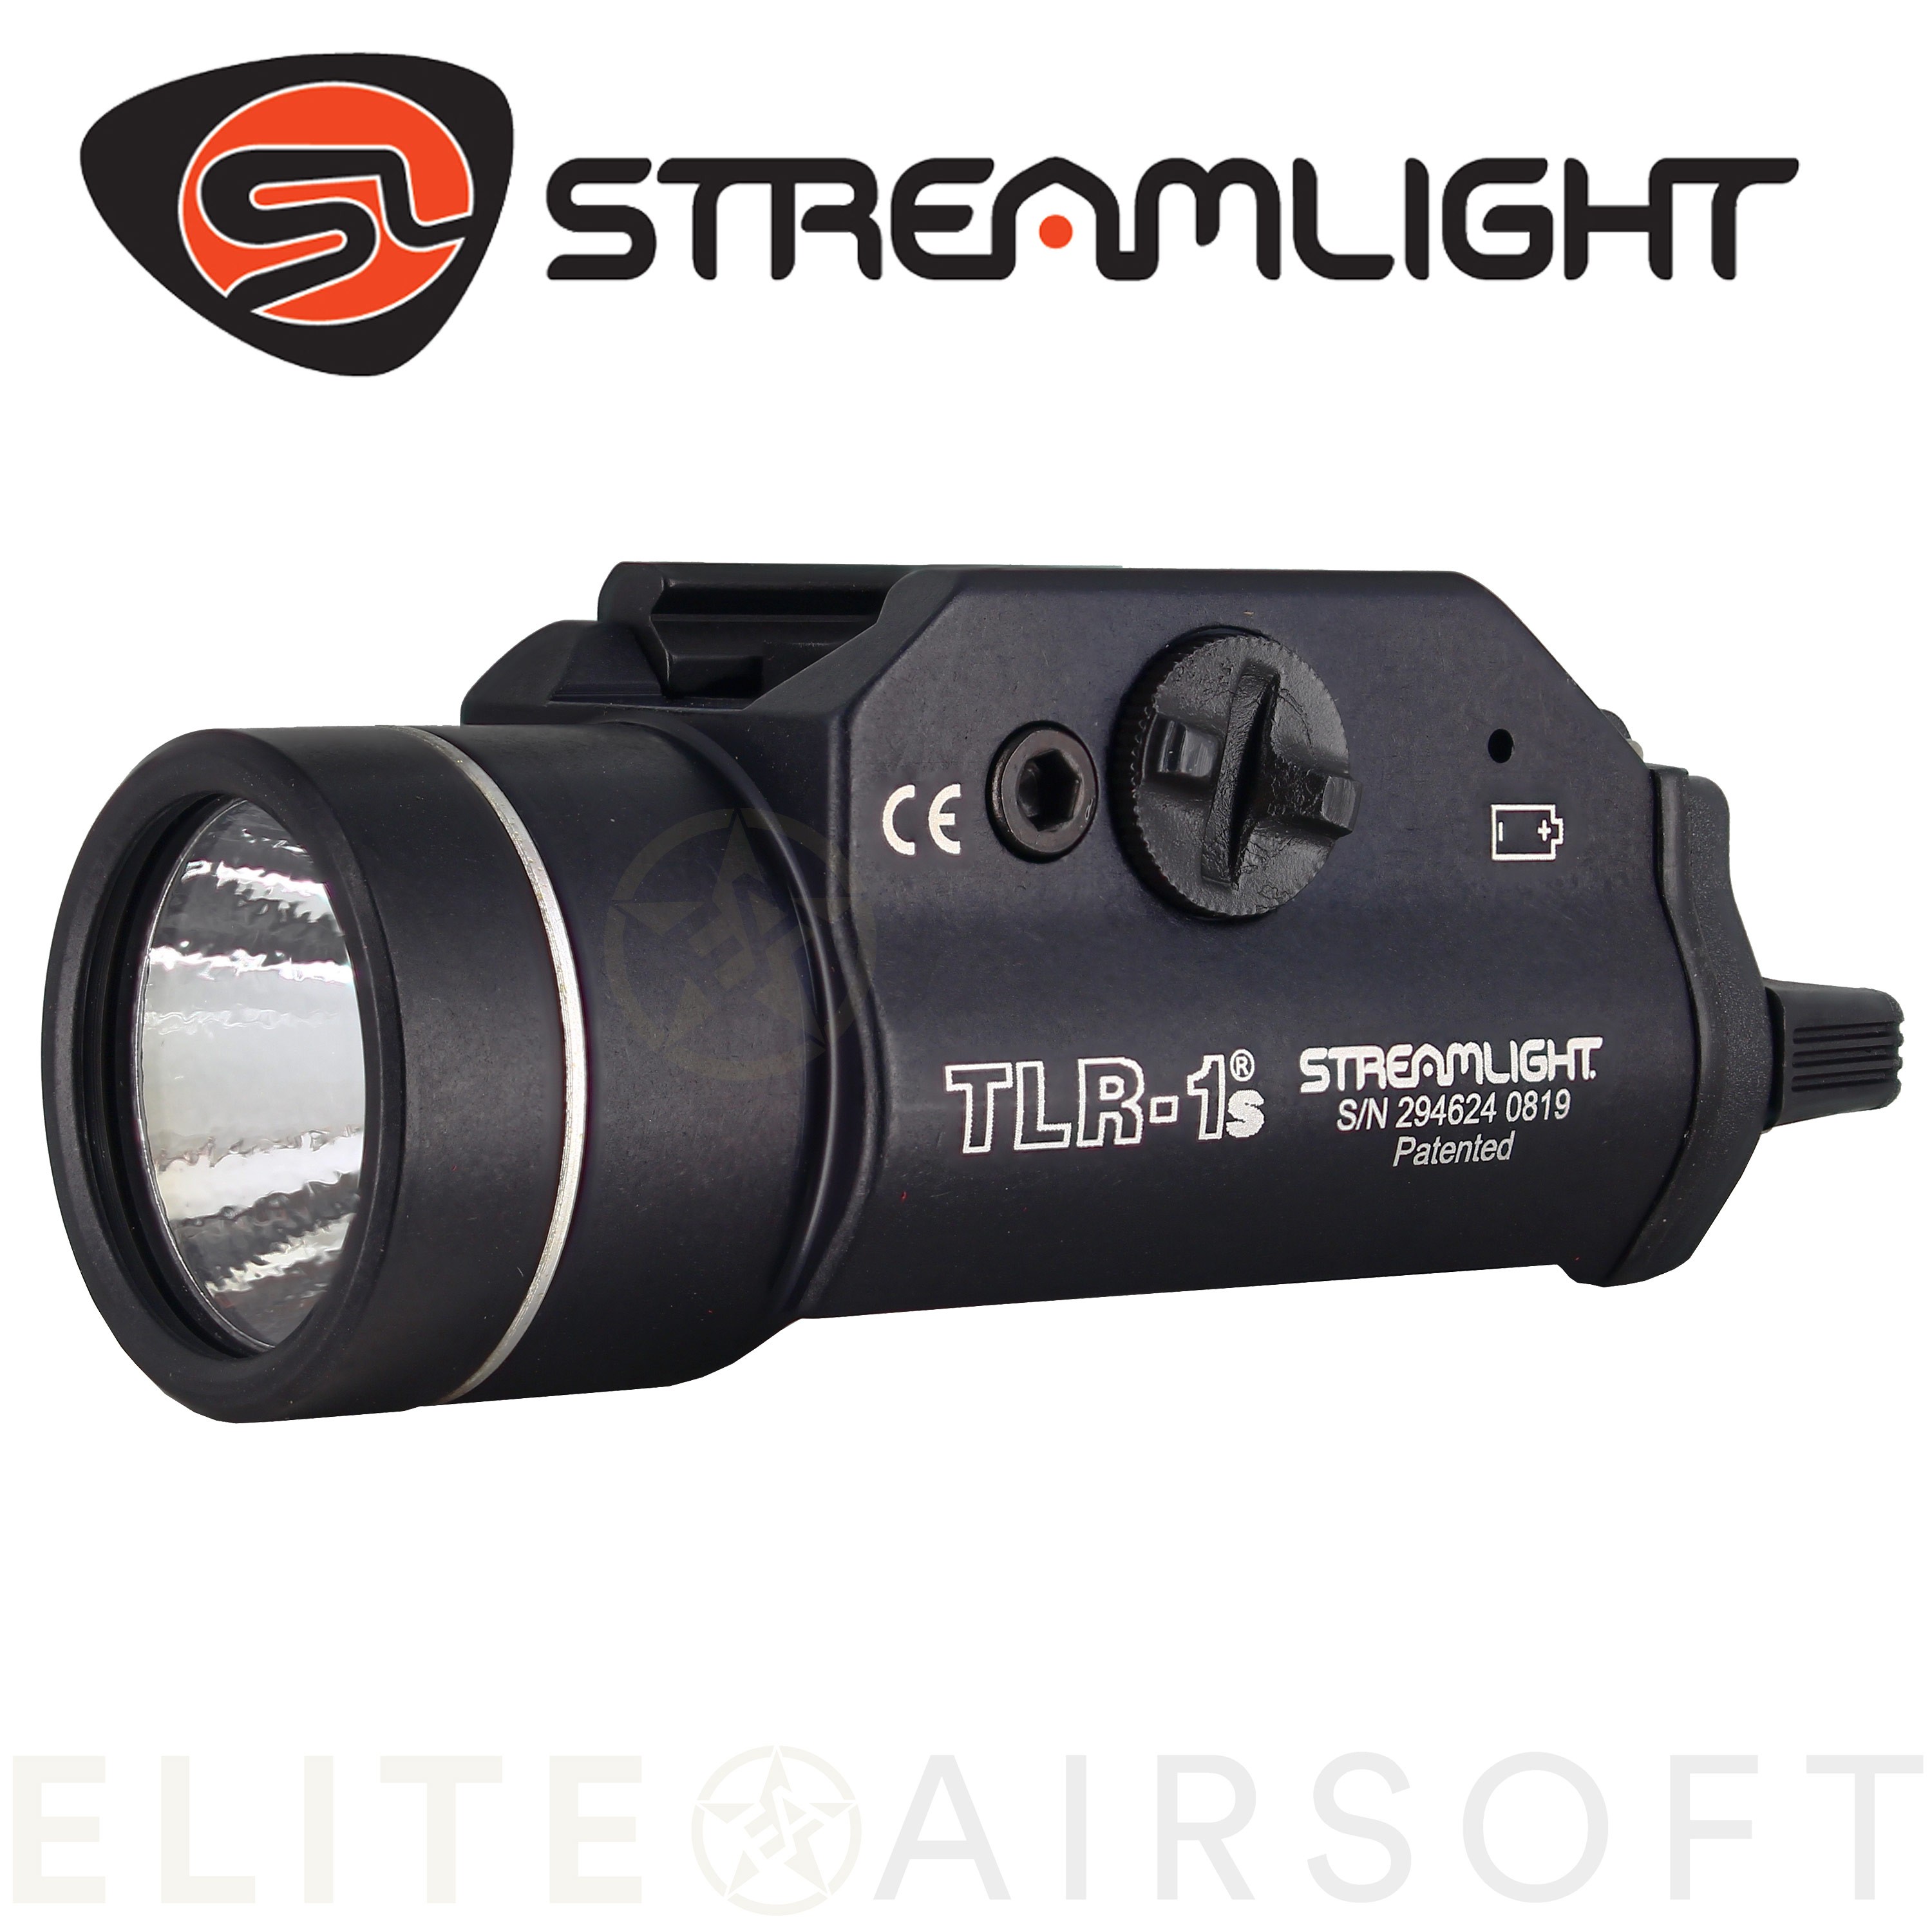 Streamlight - Lampe tactique TLR-1s - 300 Lumens - Noire - Elite Airsoft